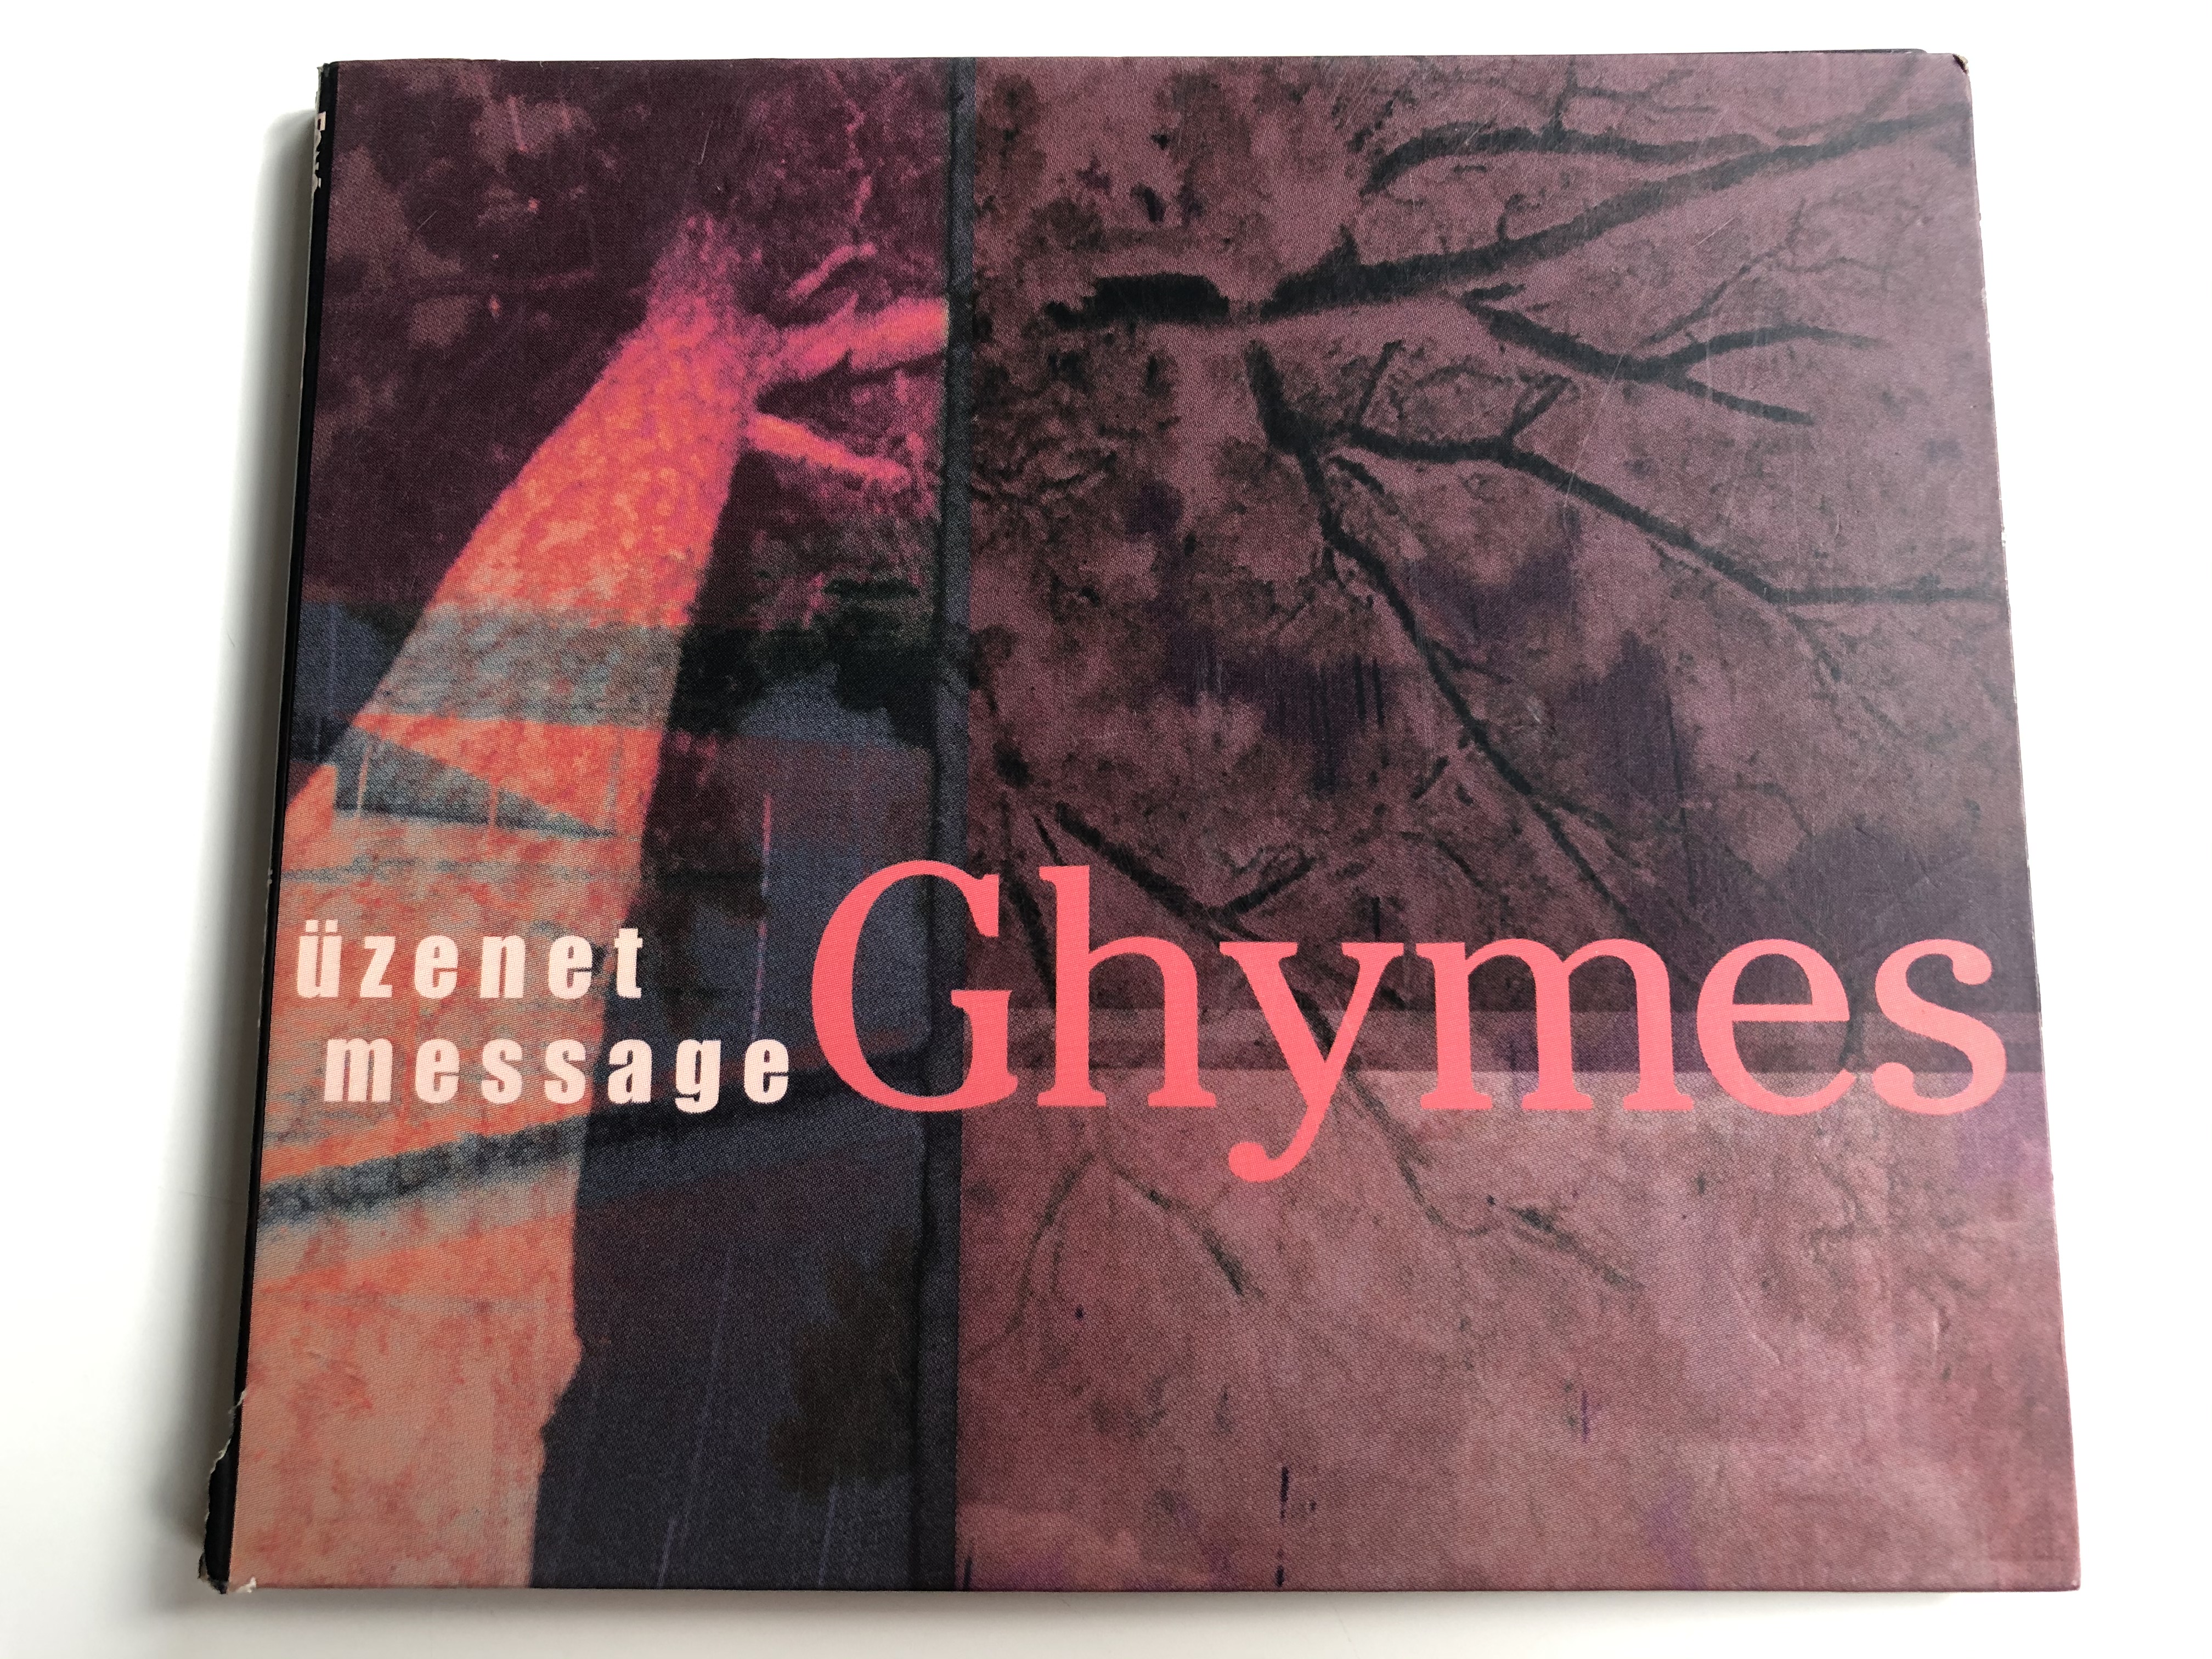 ghymes-zenet-message-fon-records-audio-cd-2001-fa-091-2-1-.jpg